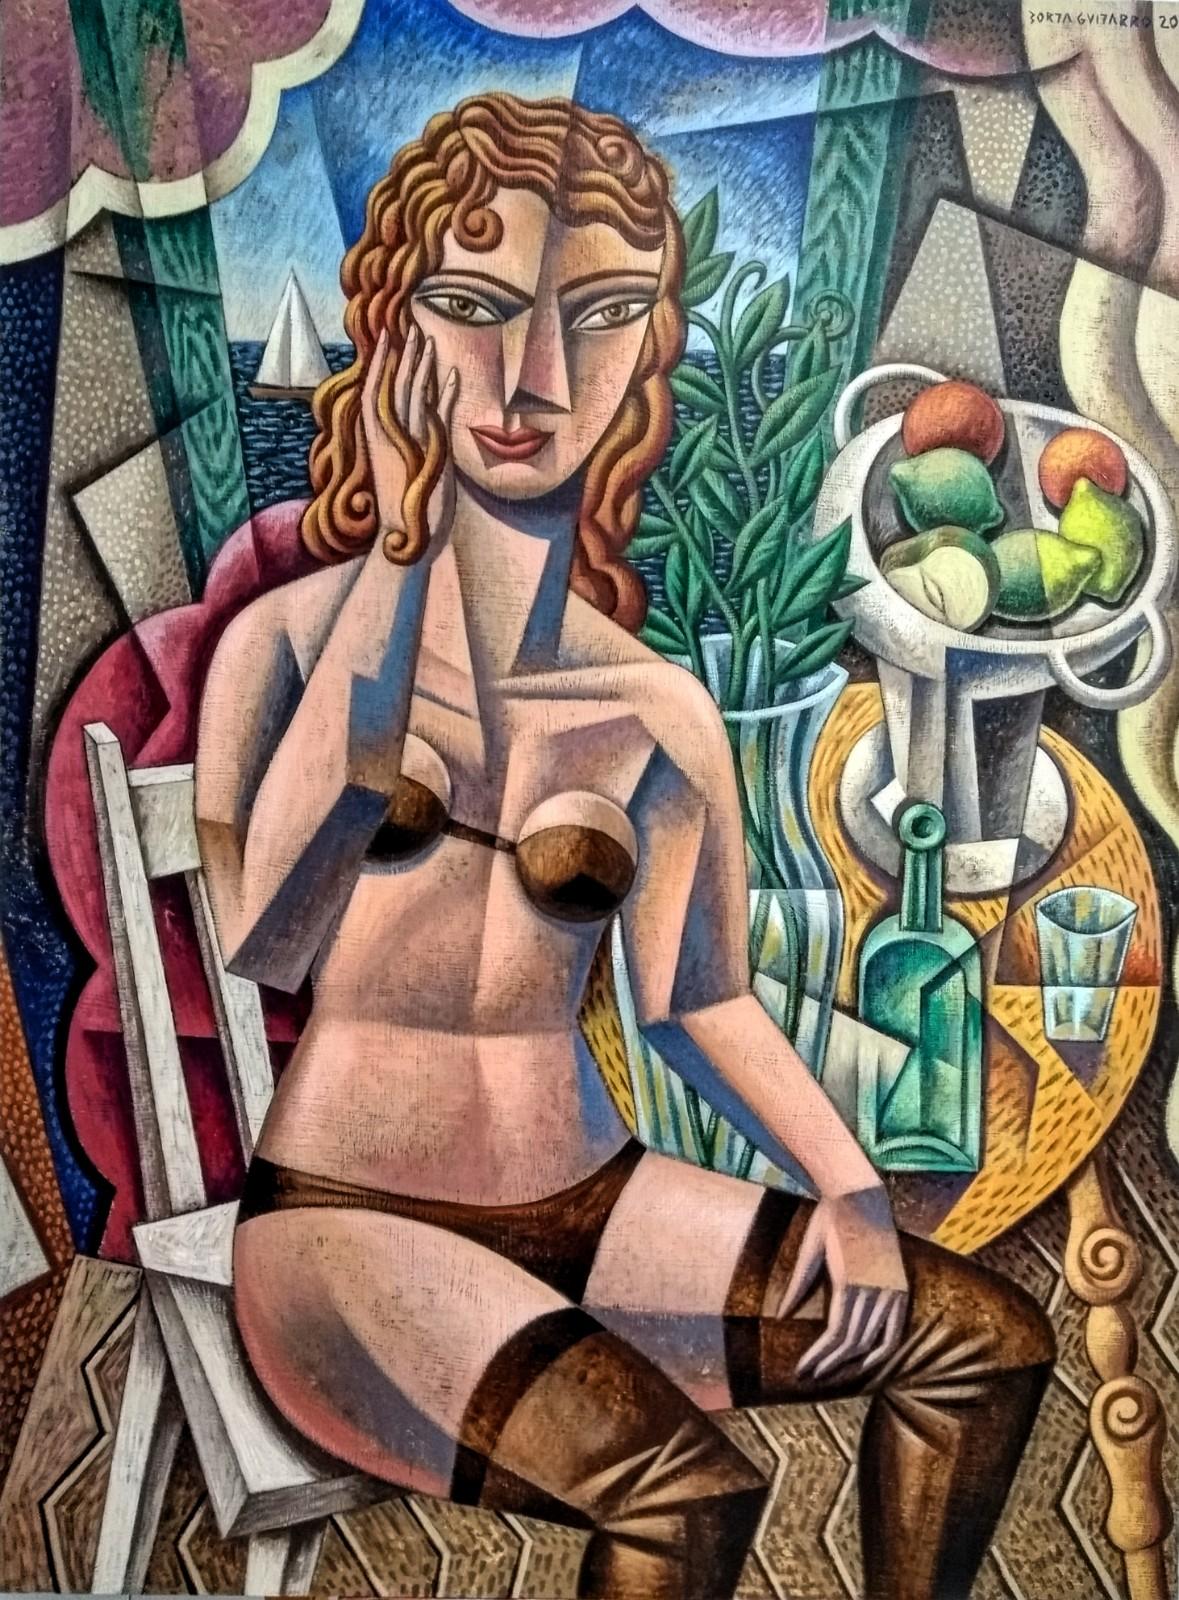 Borja Guijarro Figurative Painting - Mujer Cubista - original modern female figure human form abstract cubism acrylic